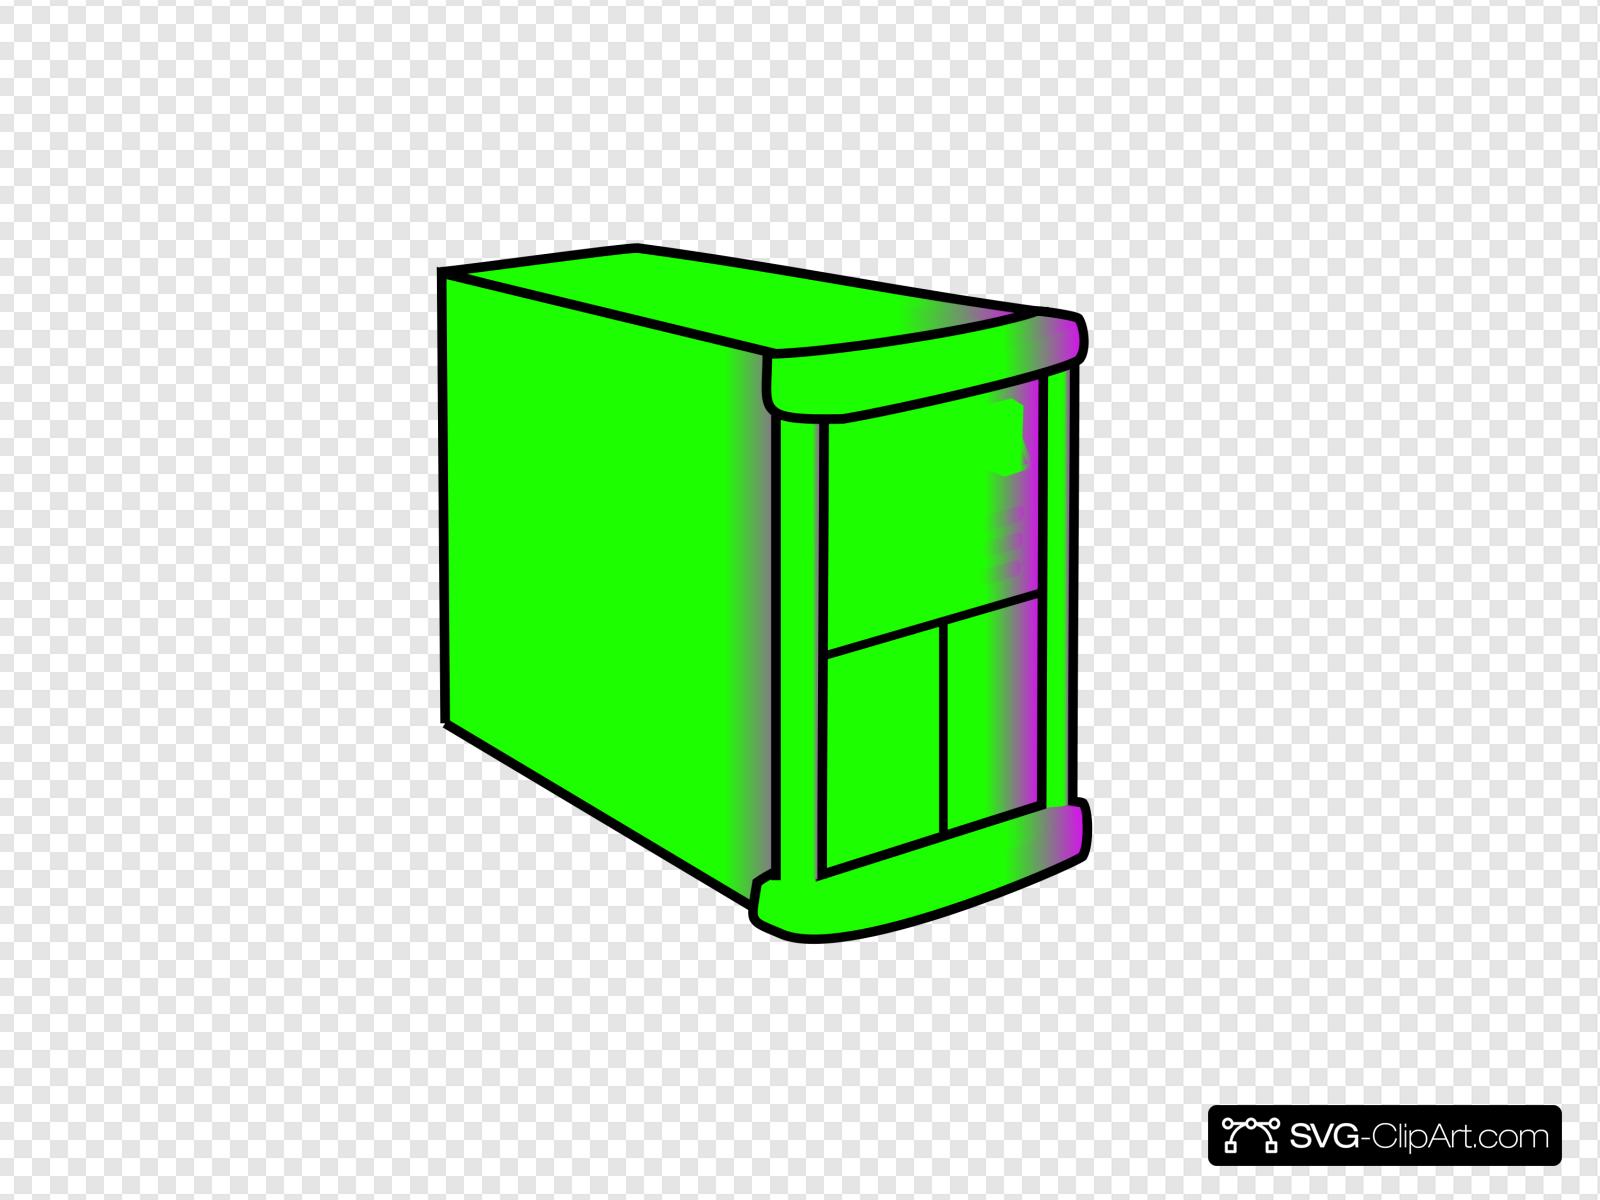 Greener Server Clip art, Icon and SVG